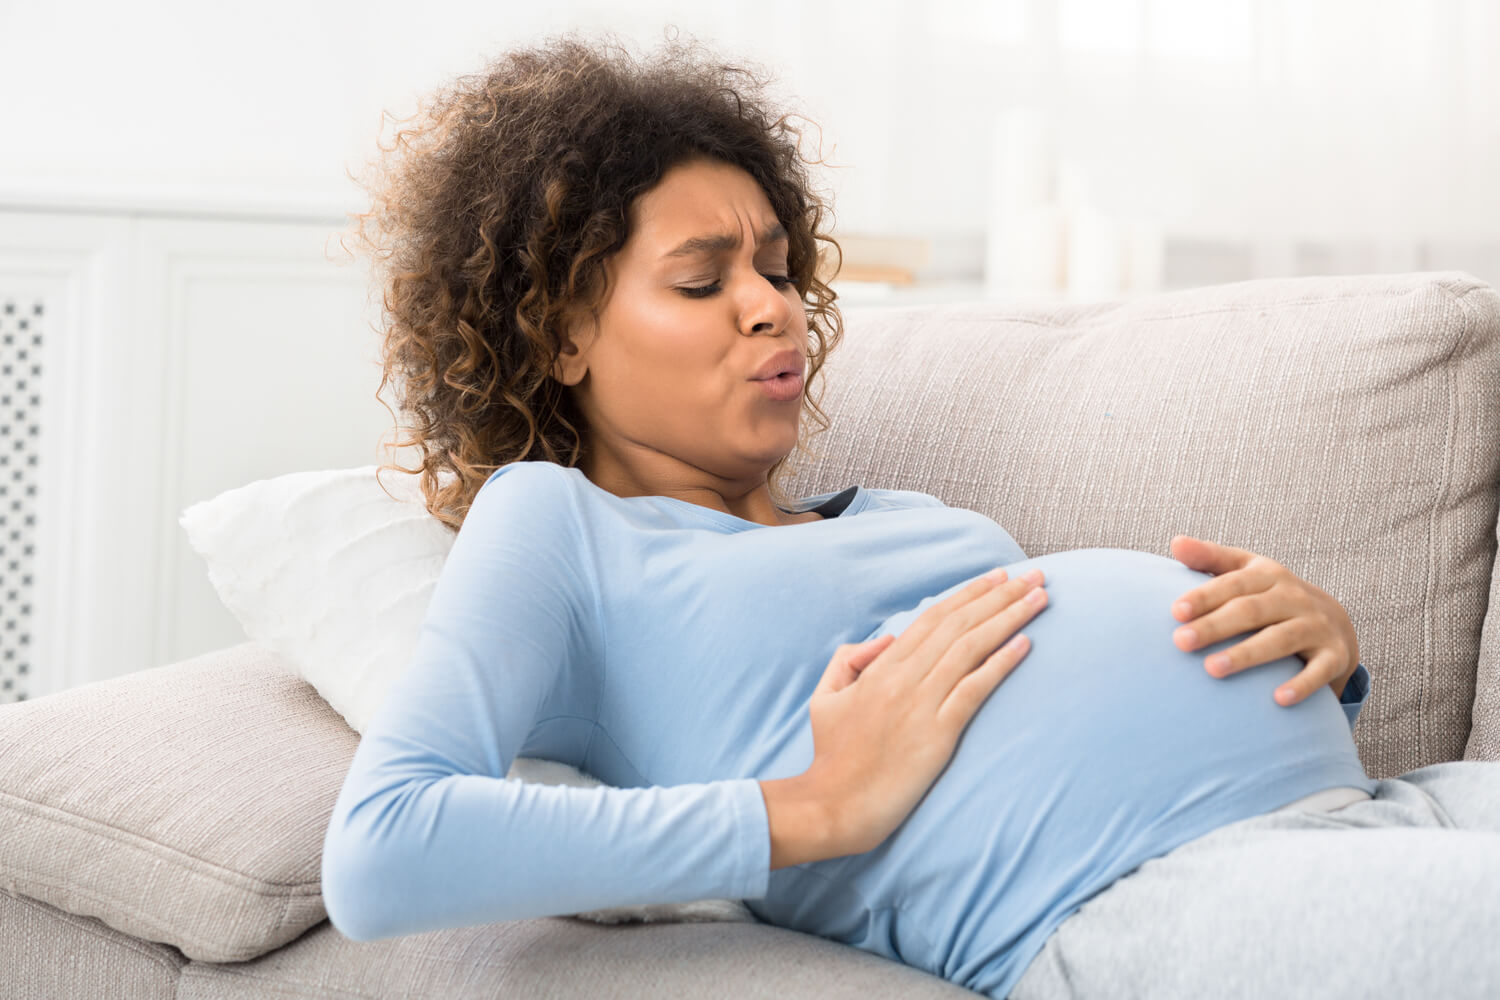 pregnant women in labor pain